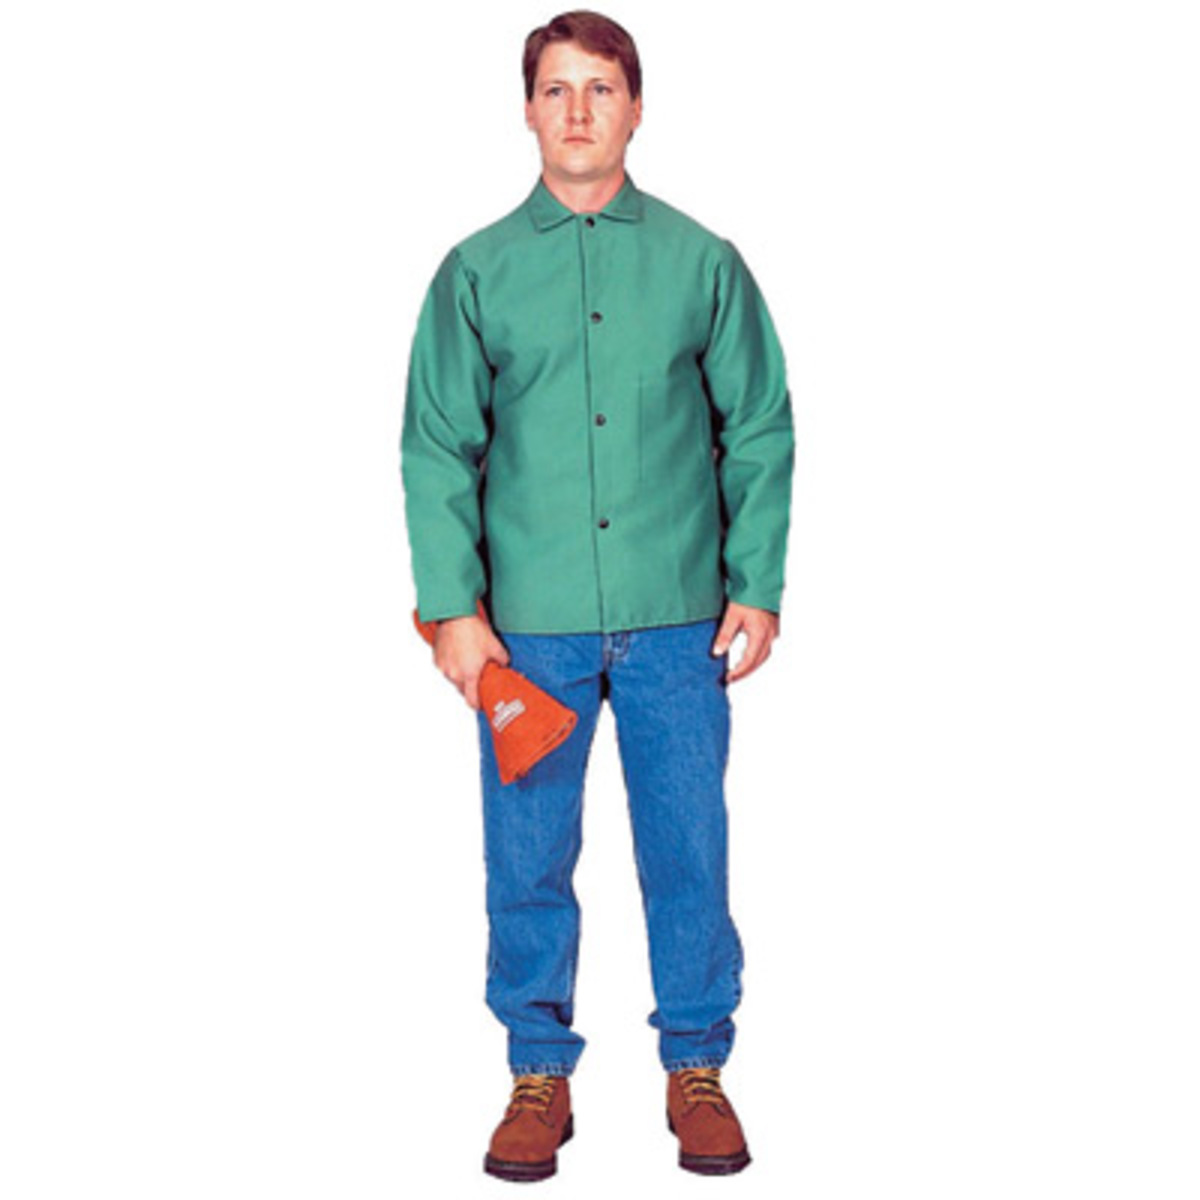 West Chester IRONCAT IRONTEX 7050 Flame Resistant Cotton Welding Jacket X-Large 